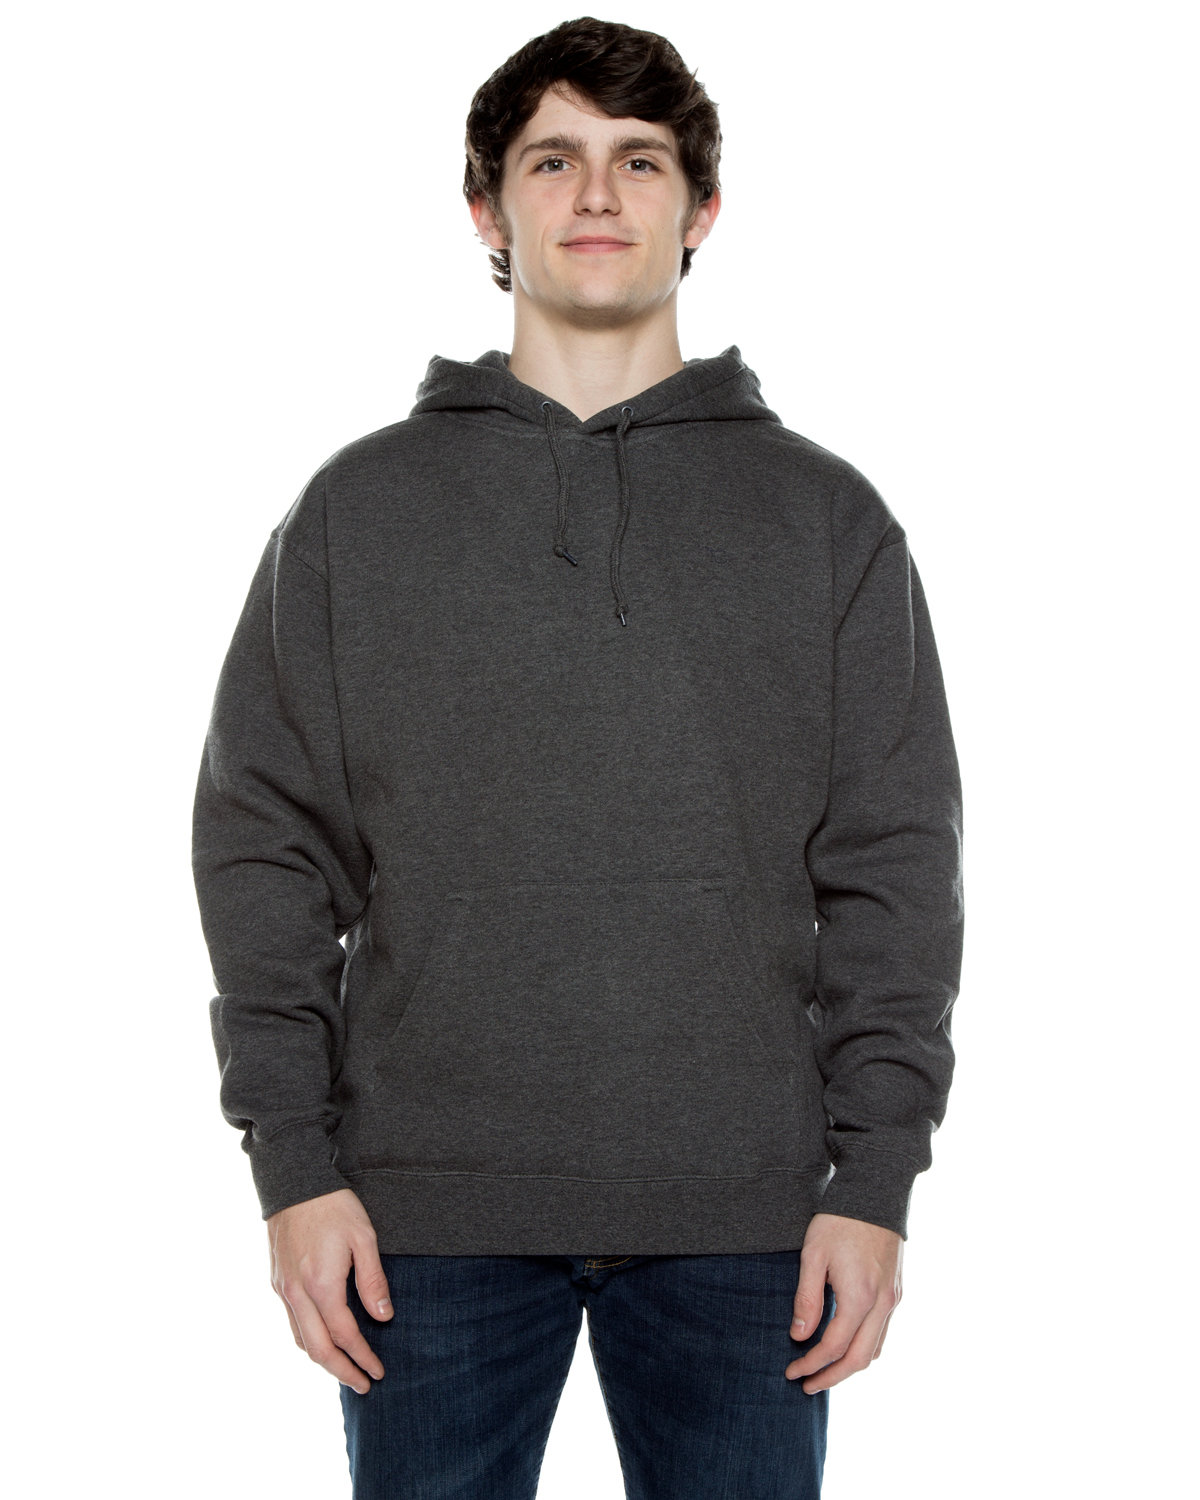 Beimar Drop Ship Unisex 10 oz. 80/20 Cotton/Poly Exclusive Hooded Sweatshirt CHARCOAL HEATHER 